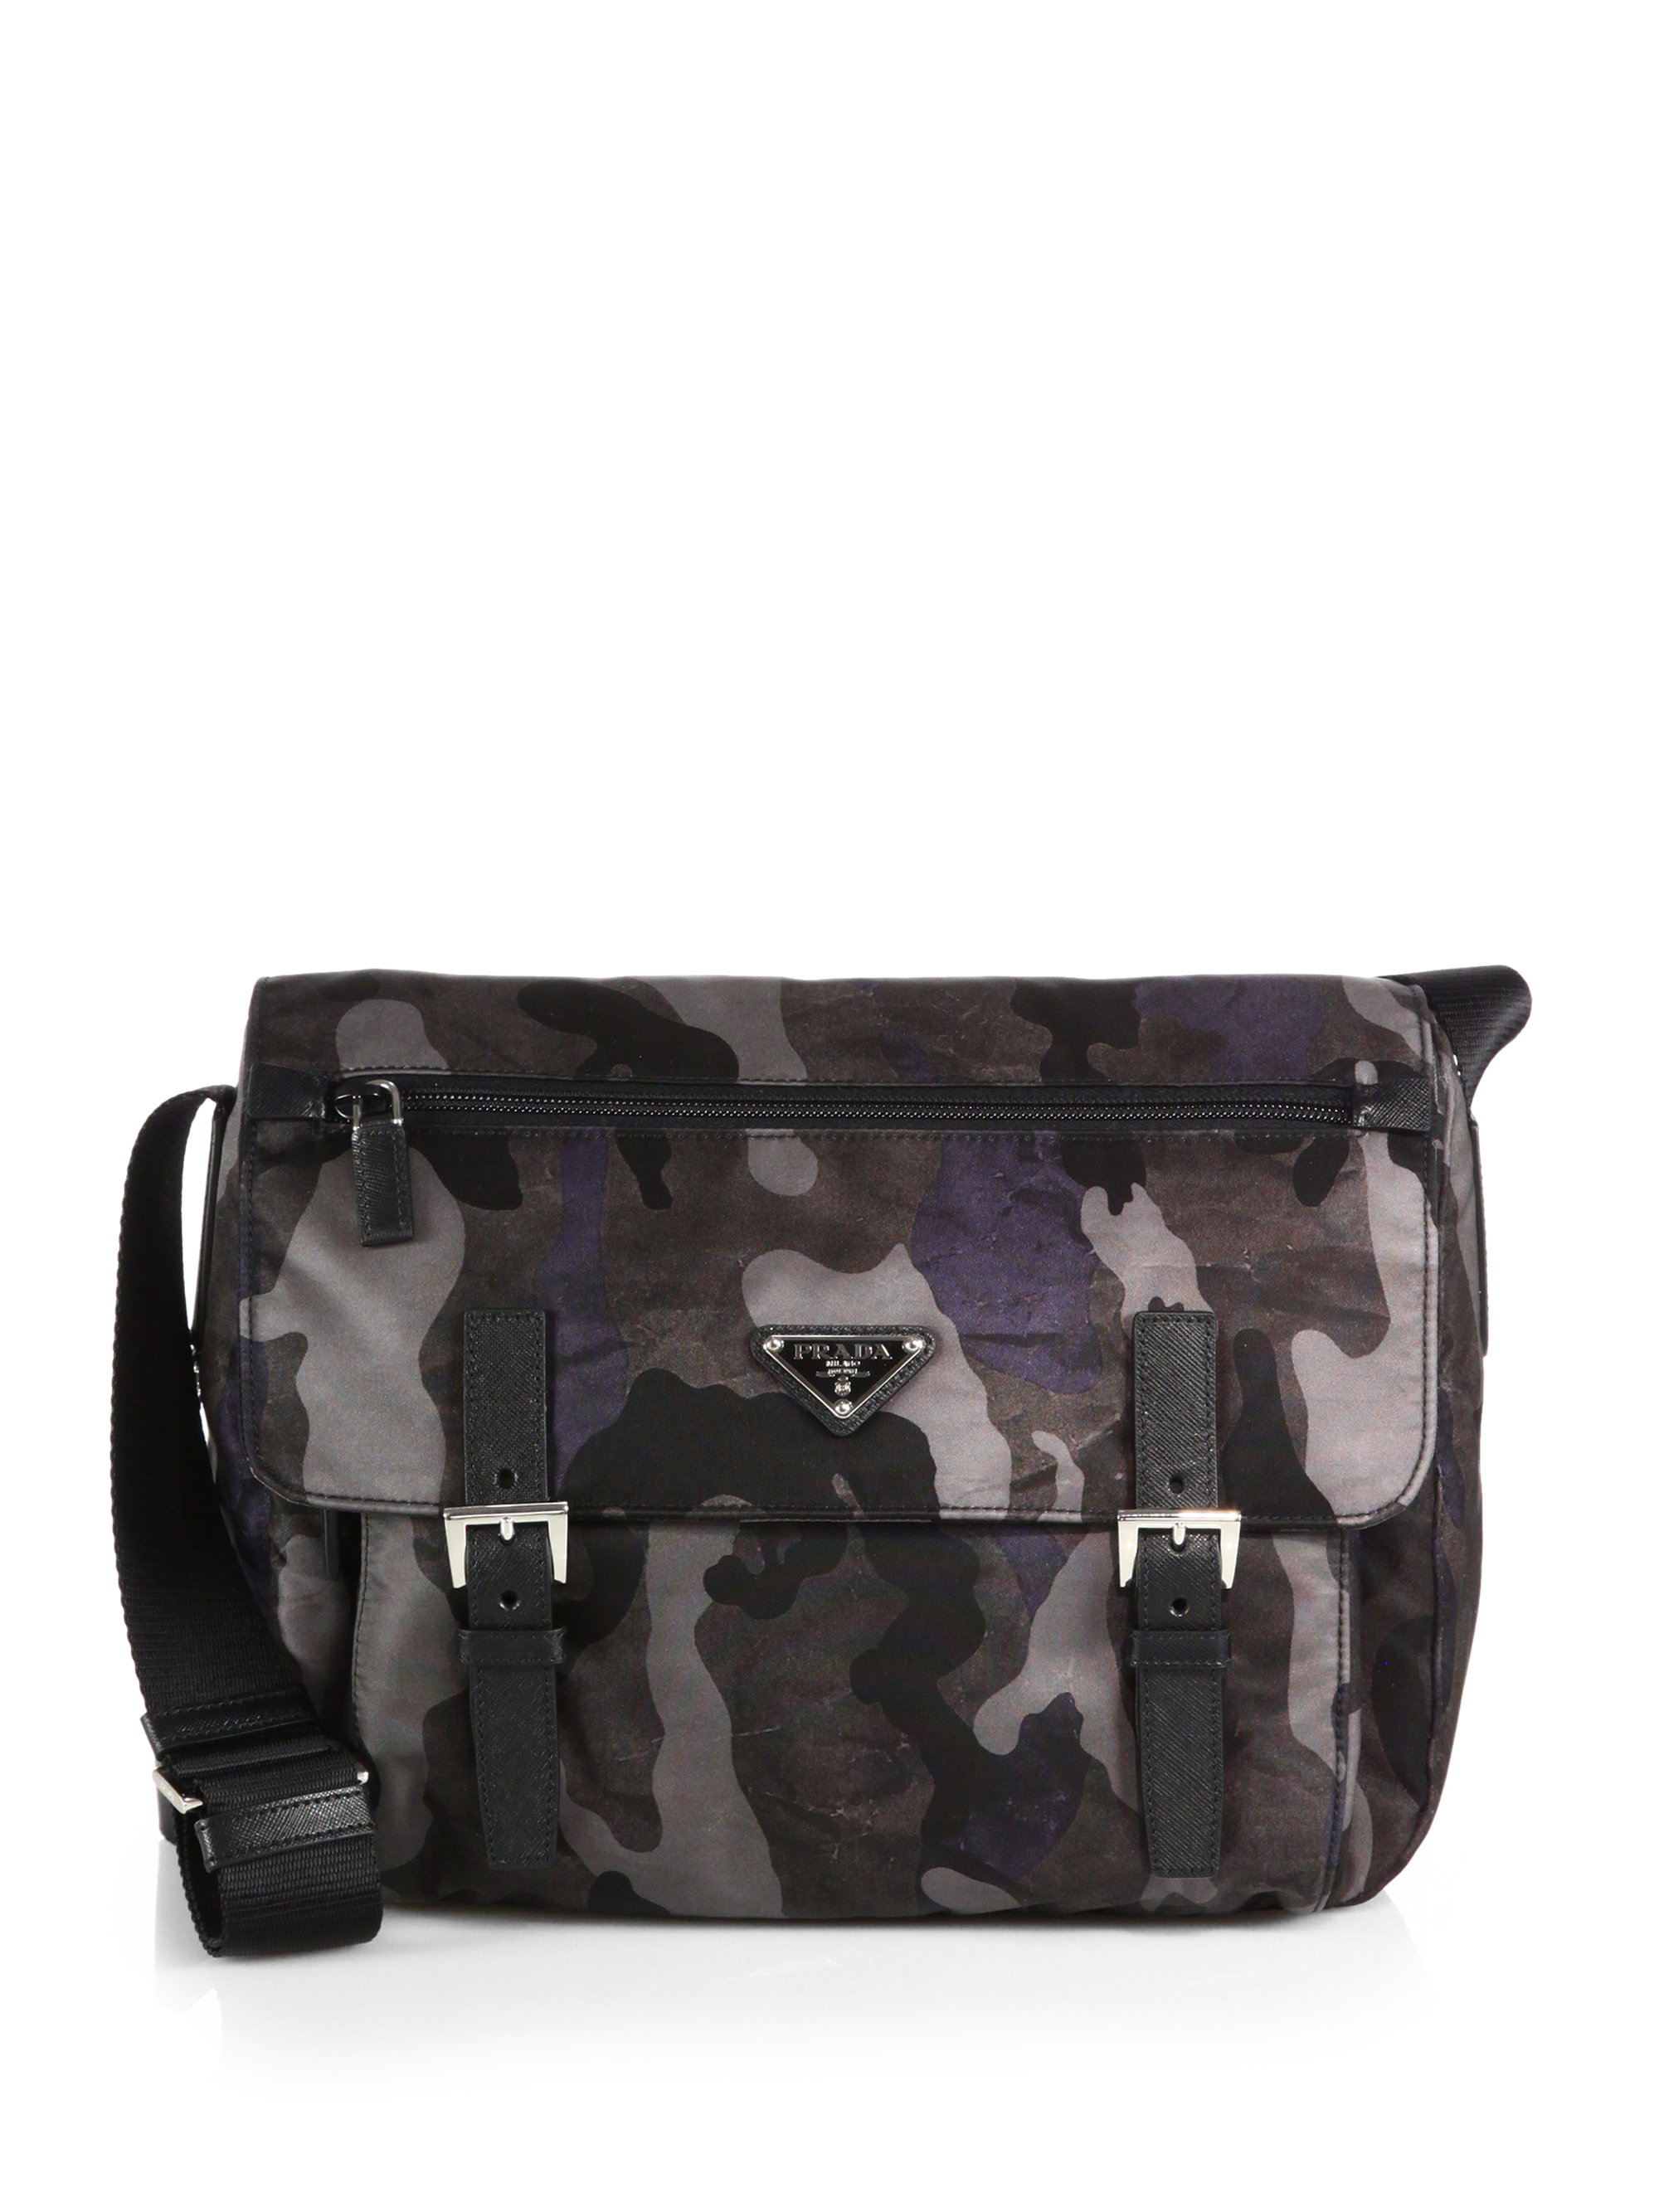 Prada Tessuto Camouflage Messenger Bag in Gray (FUMO-GREY) | Lyst  